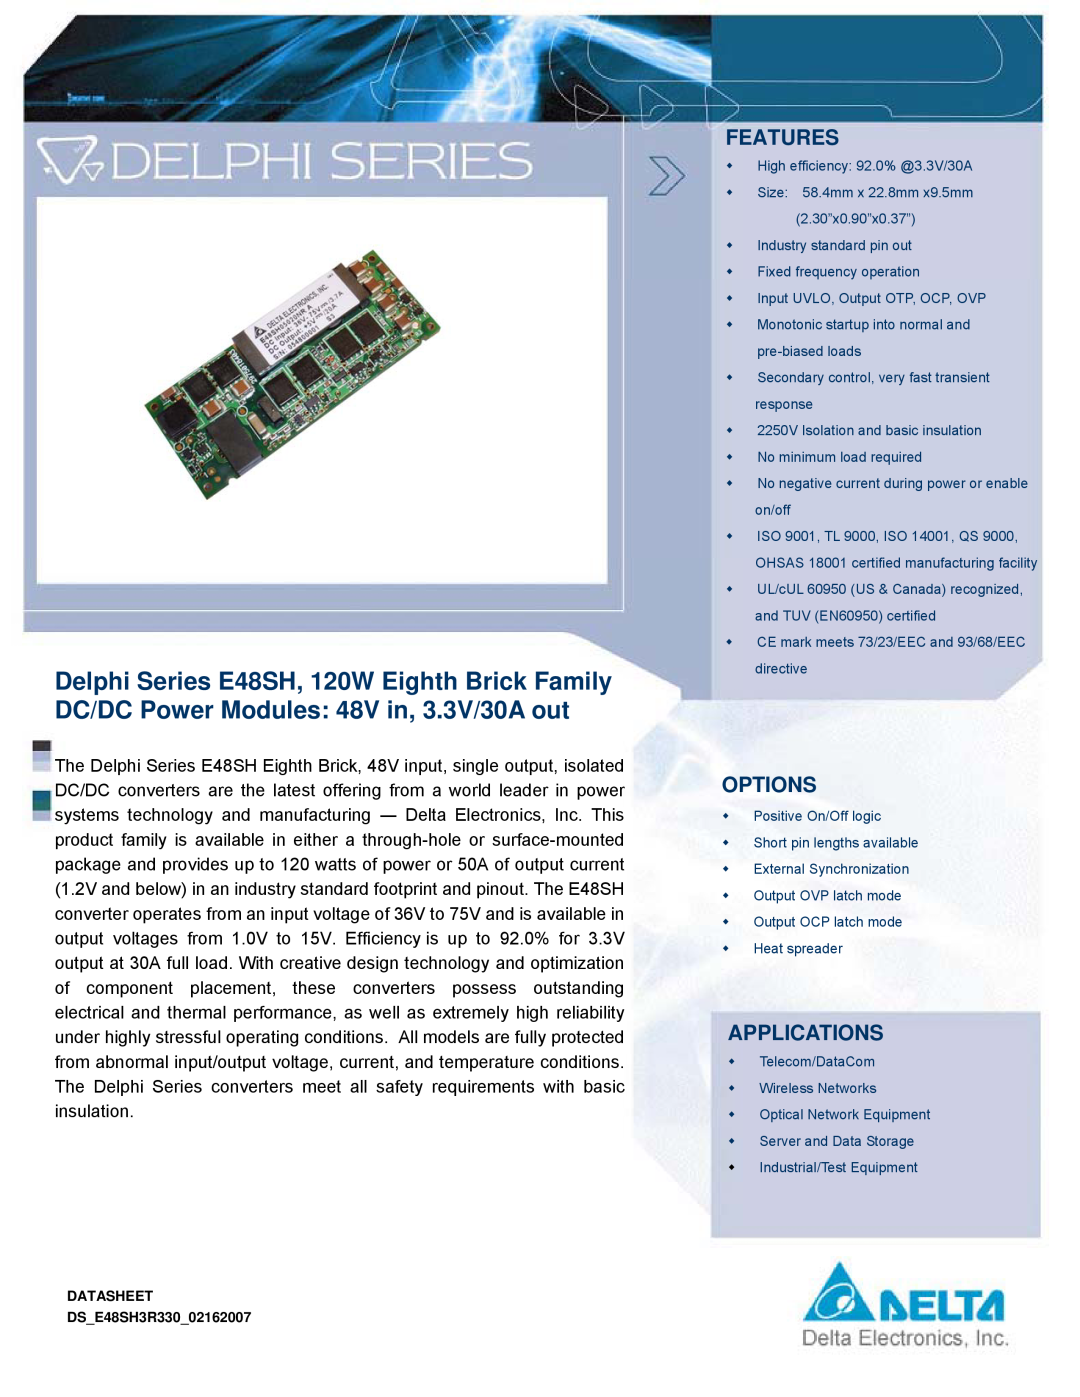 Delta Electronics Series E48SH manual Features, Options, Applications, DATASHEET DSE48SH3R33002162007 